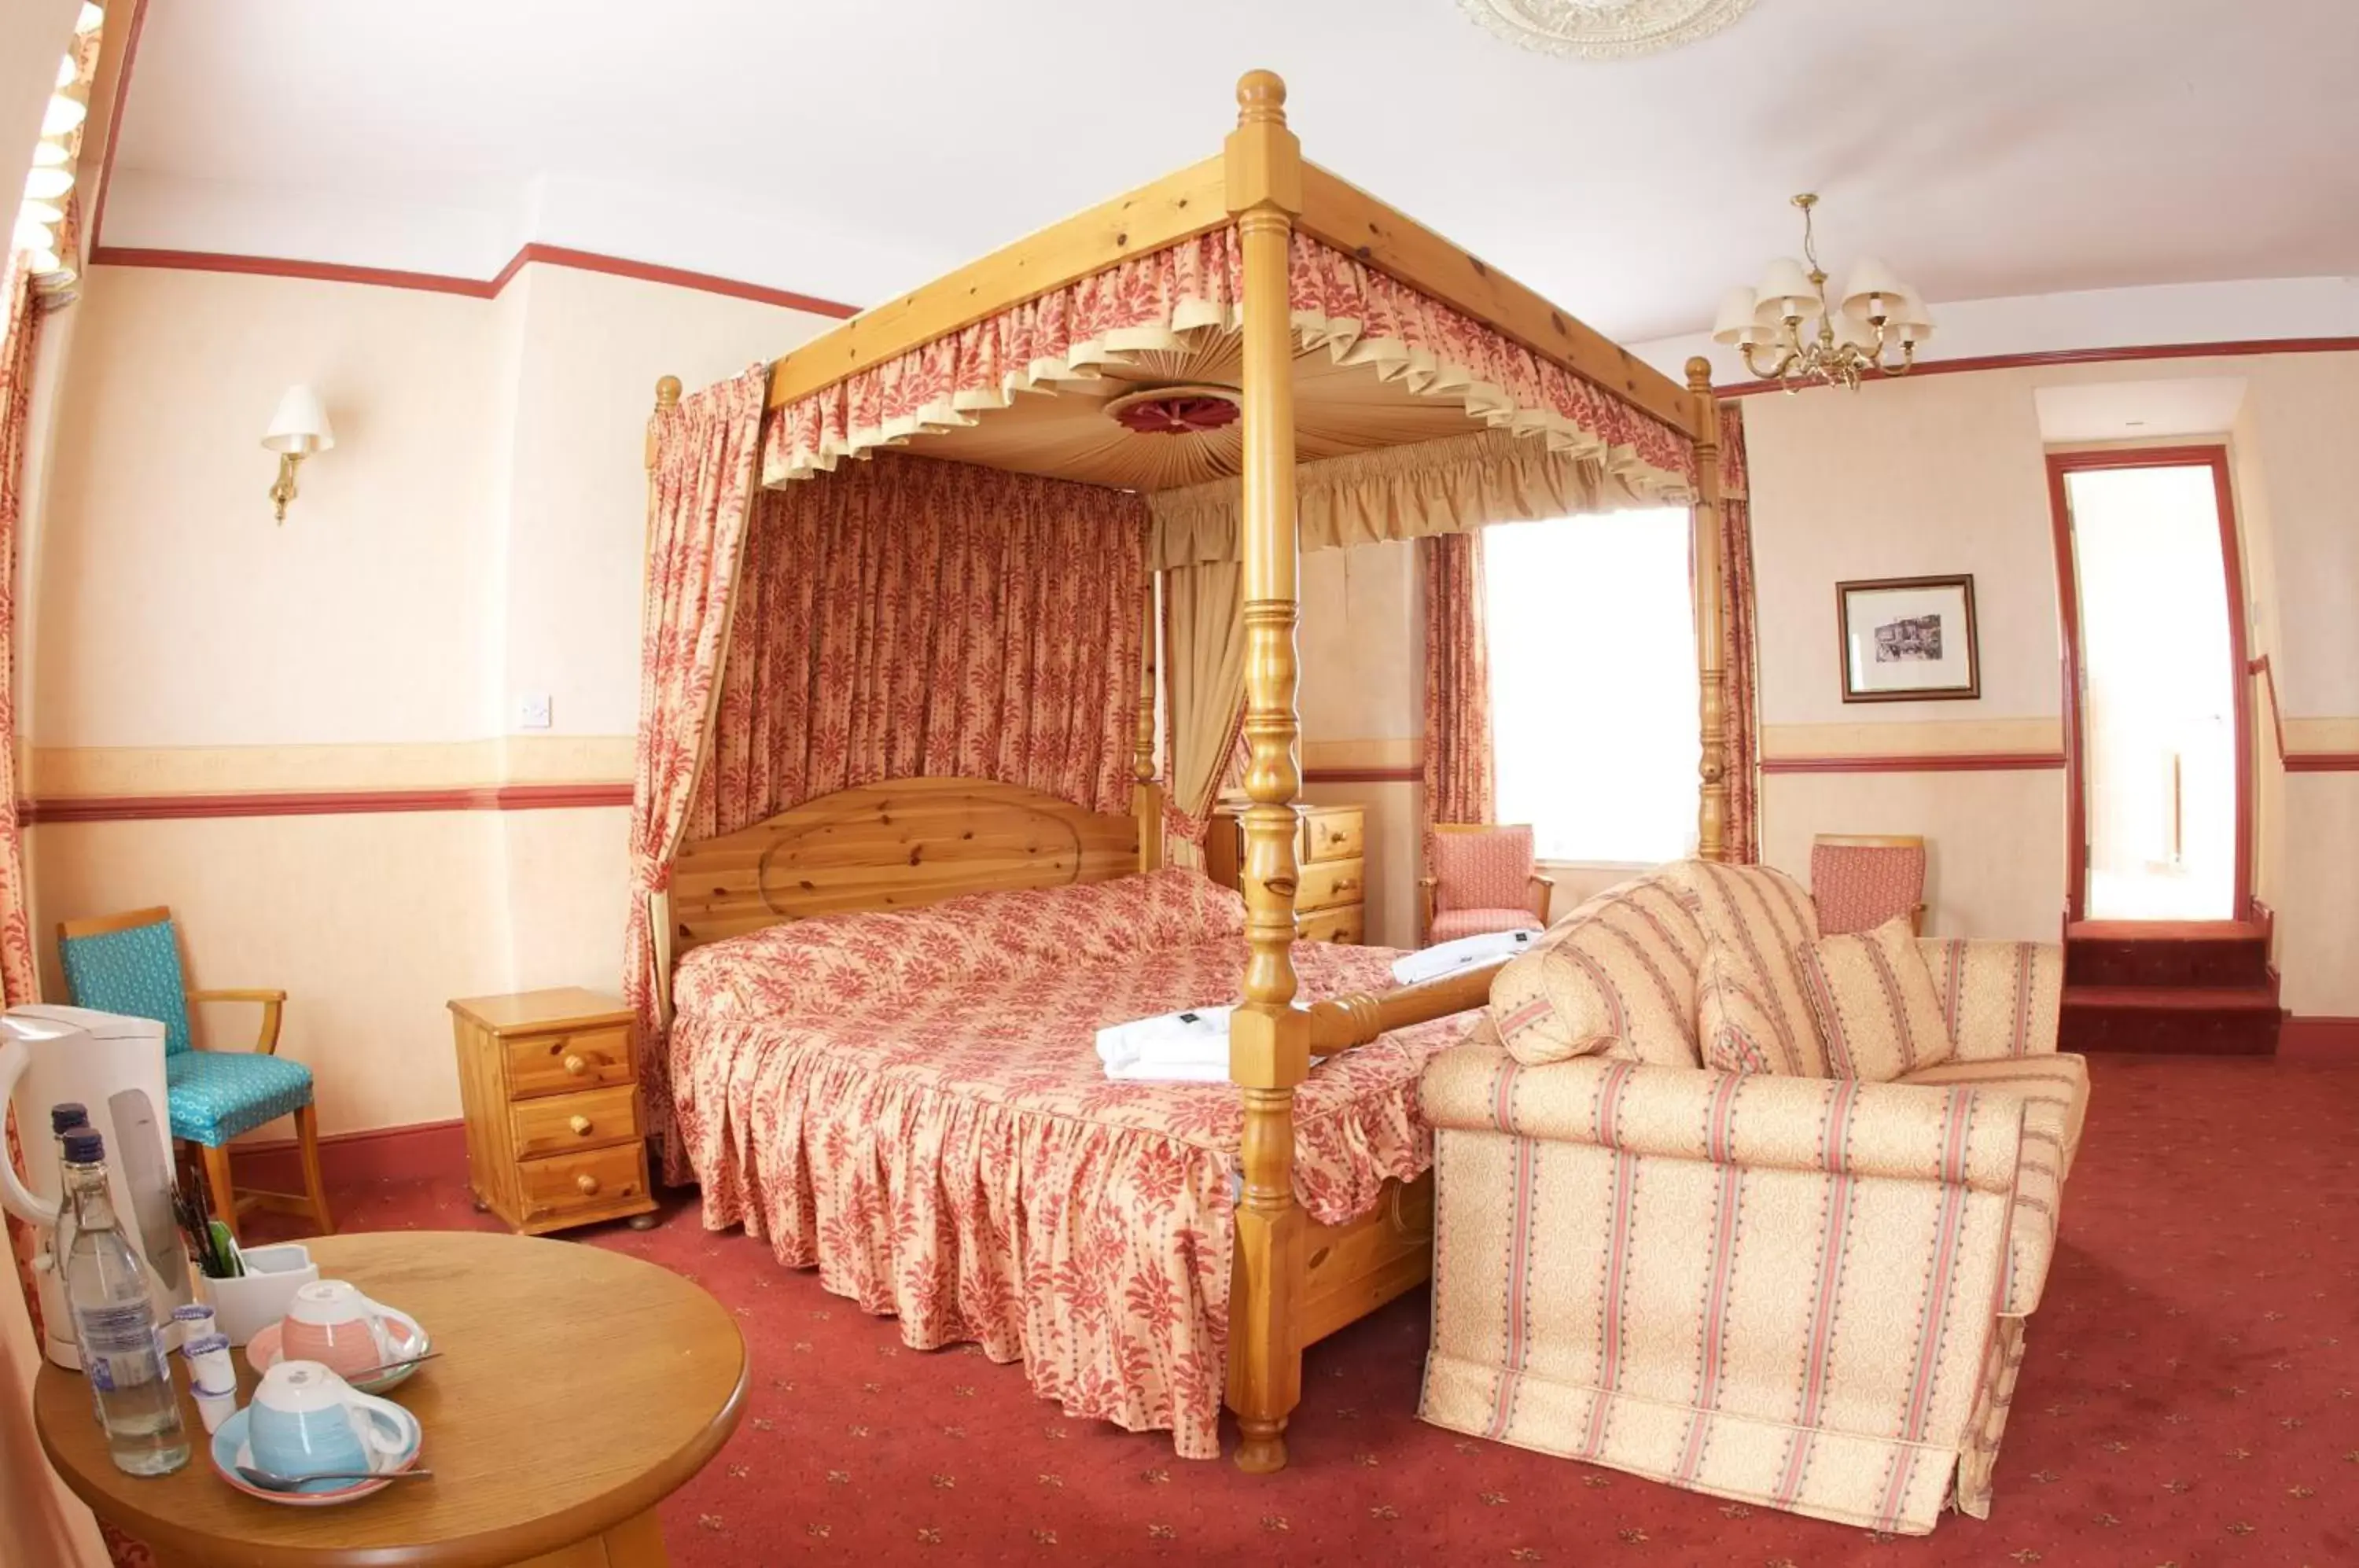 Bedroom in Radstock Hotel near Bath